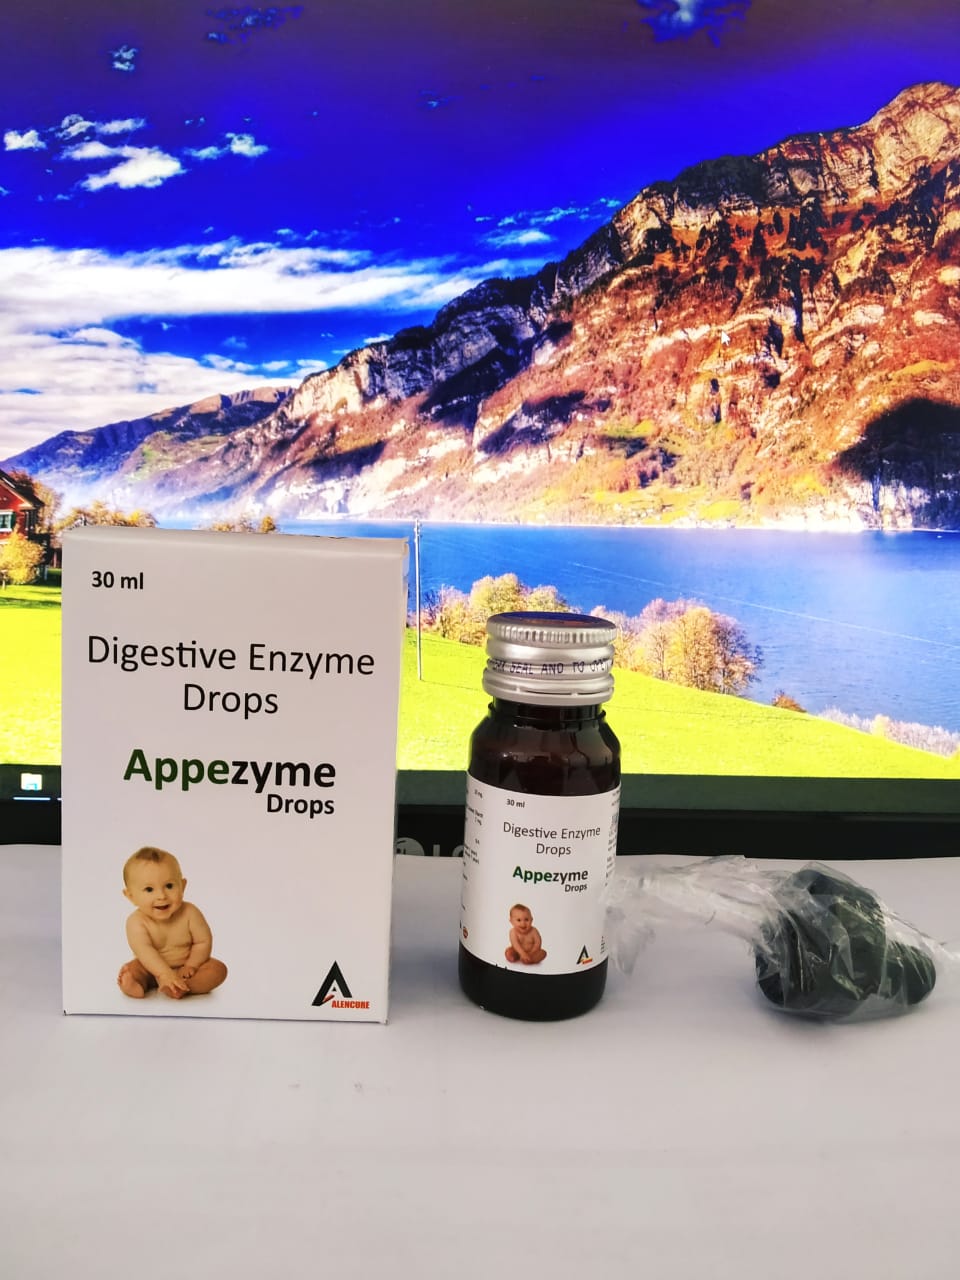 Product Name: Appezyme drop, Compositions of Appezyme drop are Digestive Enzymes Drops - Alencure Biotech Pvt Ltd